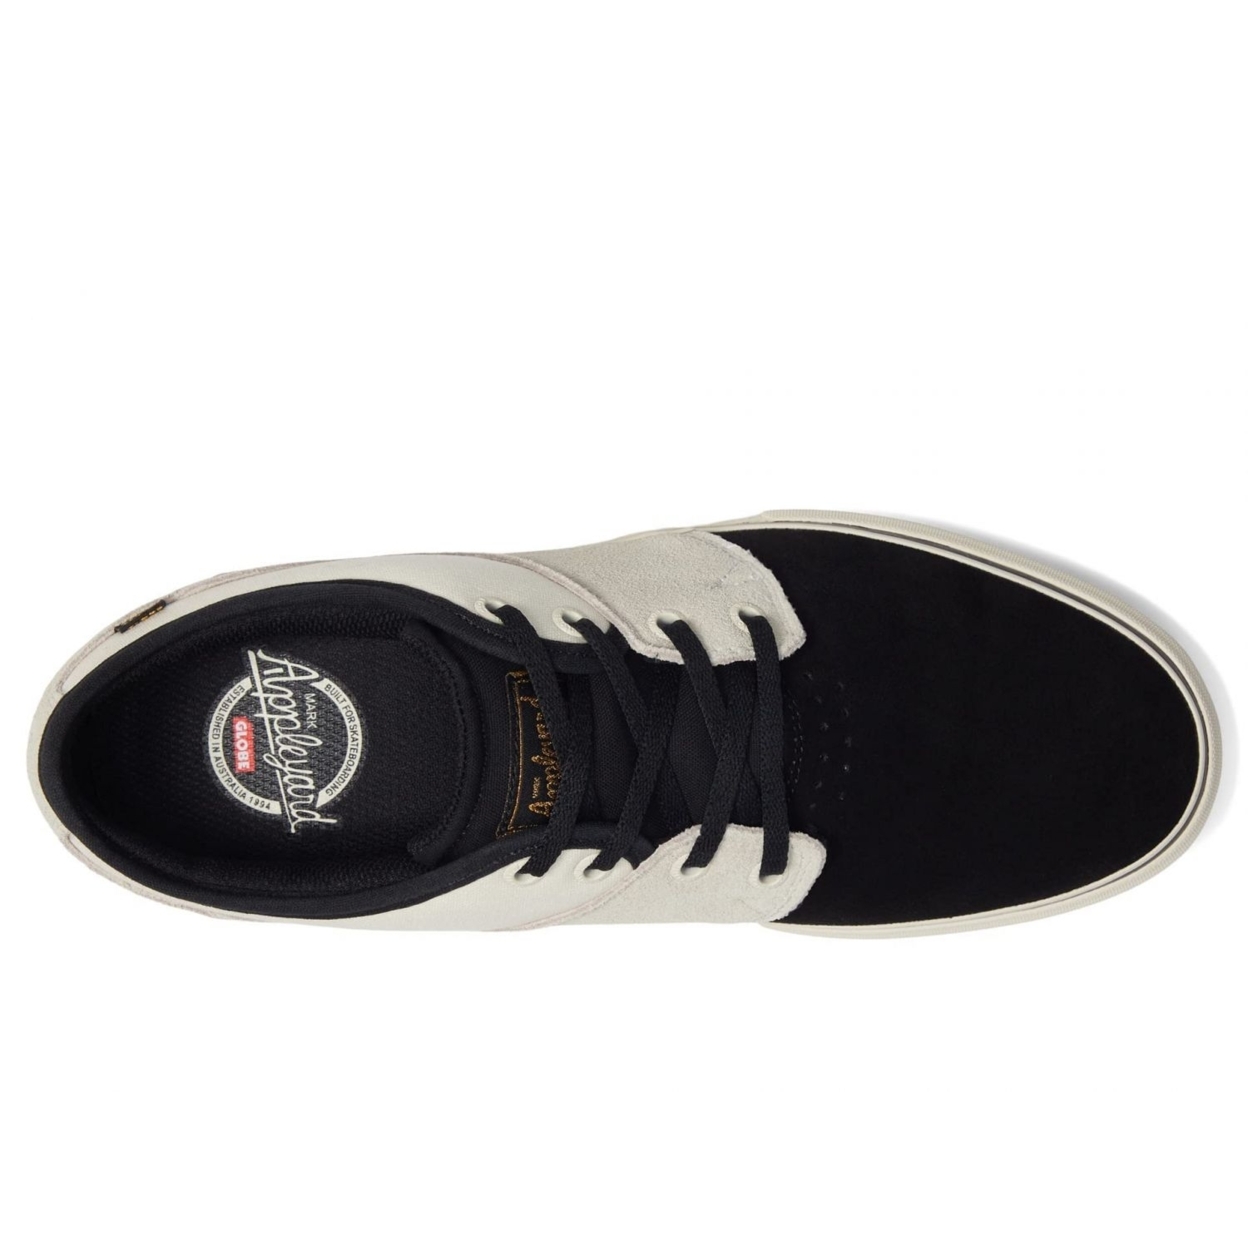 Globe Men's Mahalo Skate Shoe 14 BLACK/OFF WHITE - BLACK/OFF WHITE, 8.5